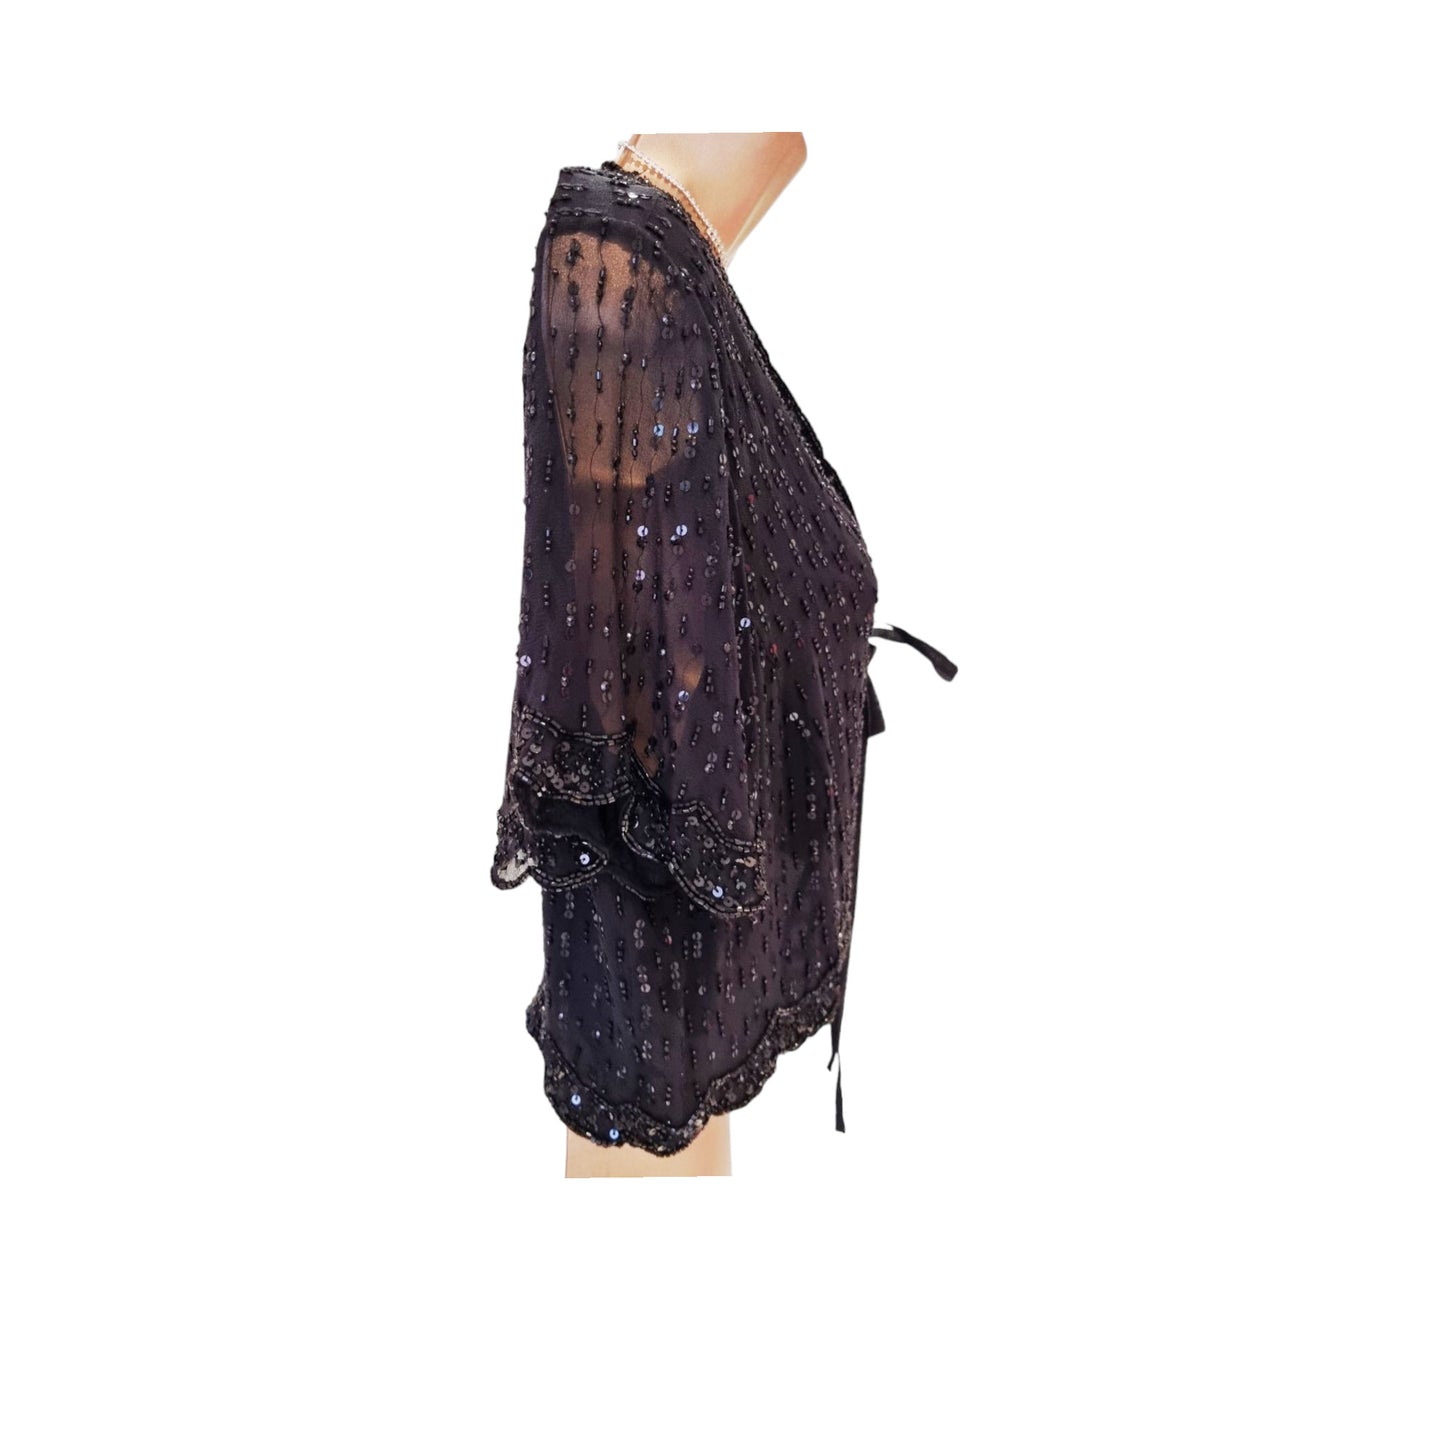 Caroline Charles Vintage Black Silk Sequin Dress & Bolero UK 16 US 12 EU 44 IT 48 Timeless Fashions